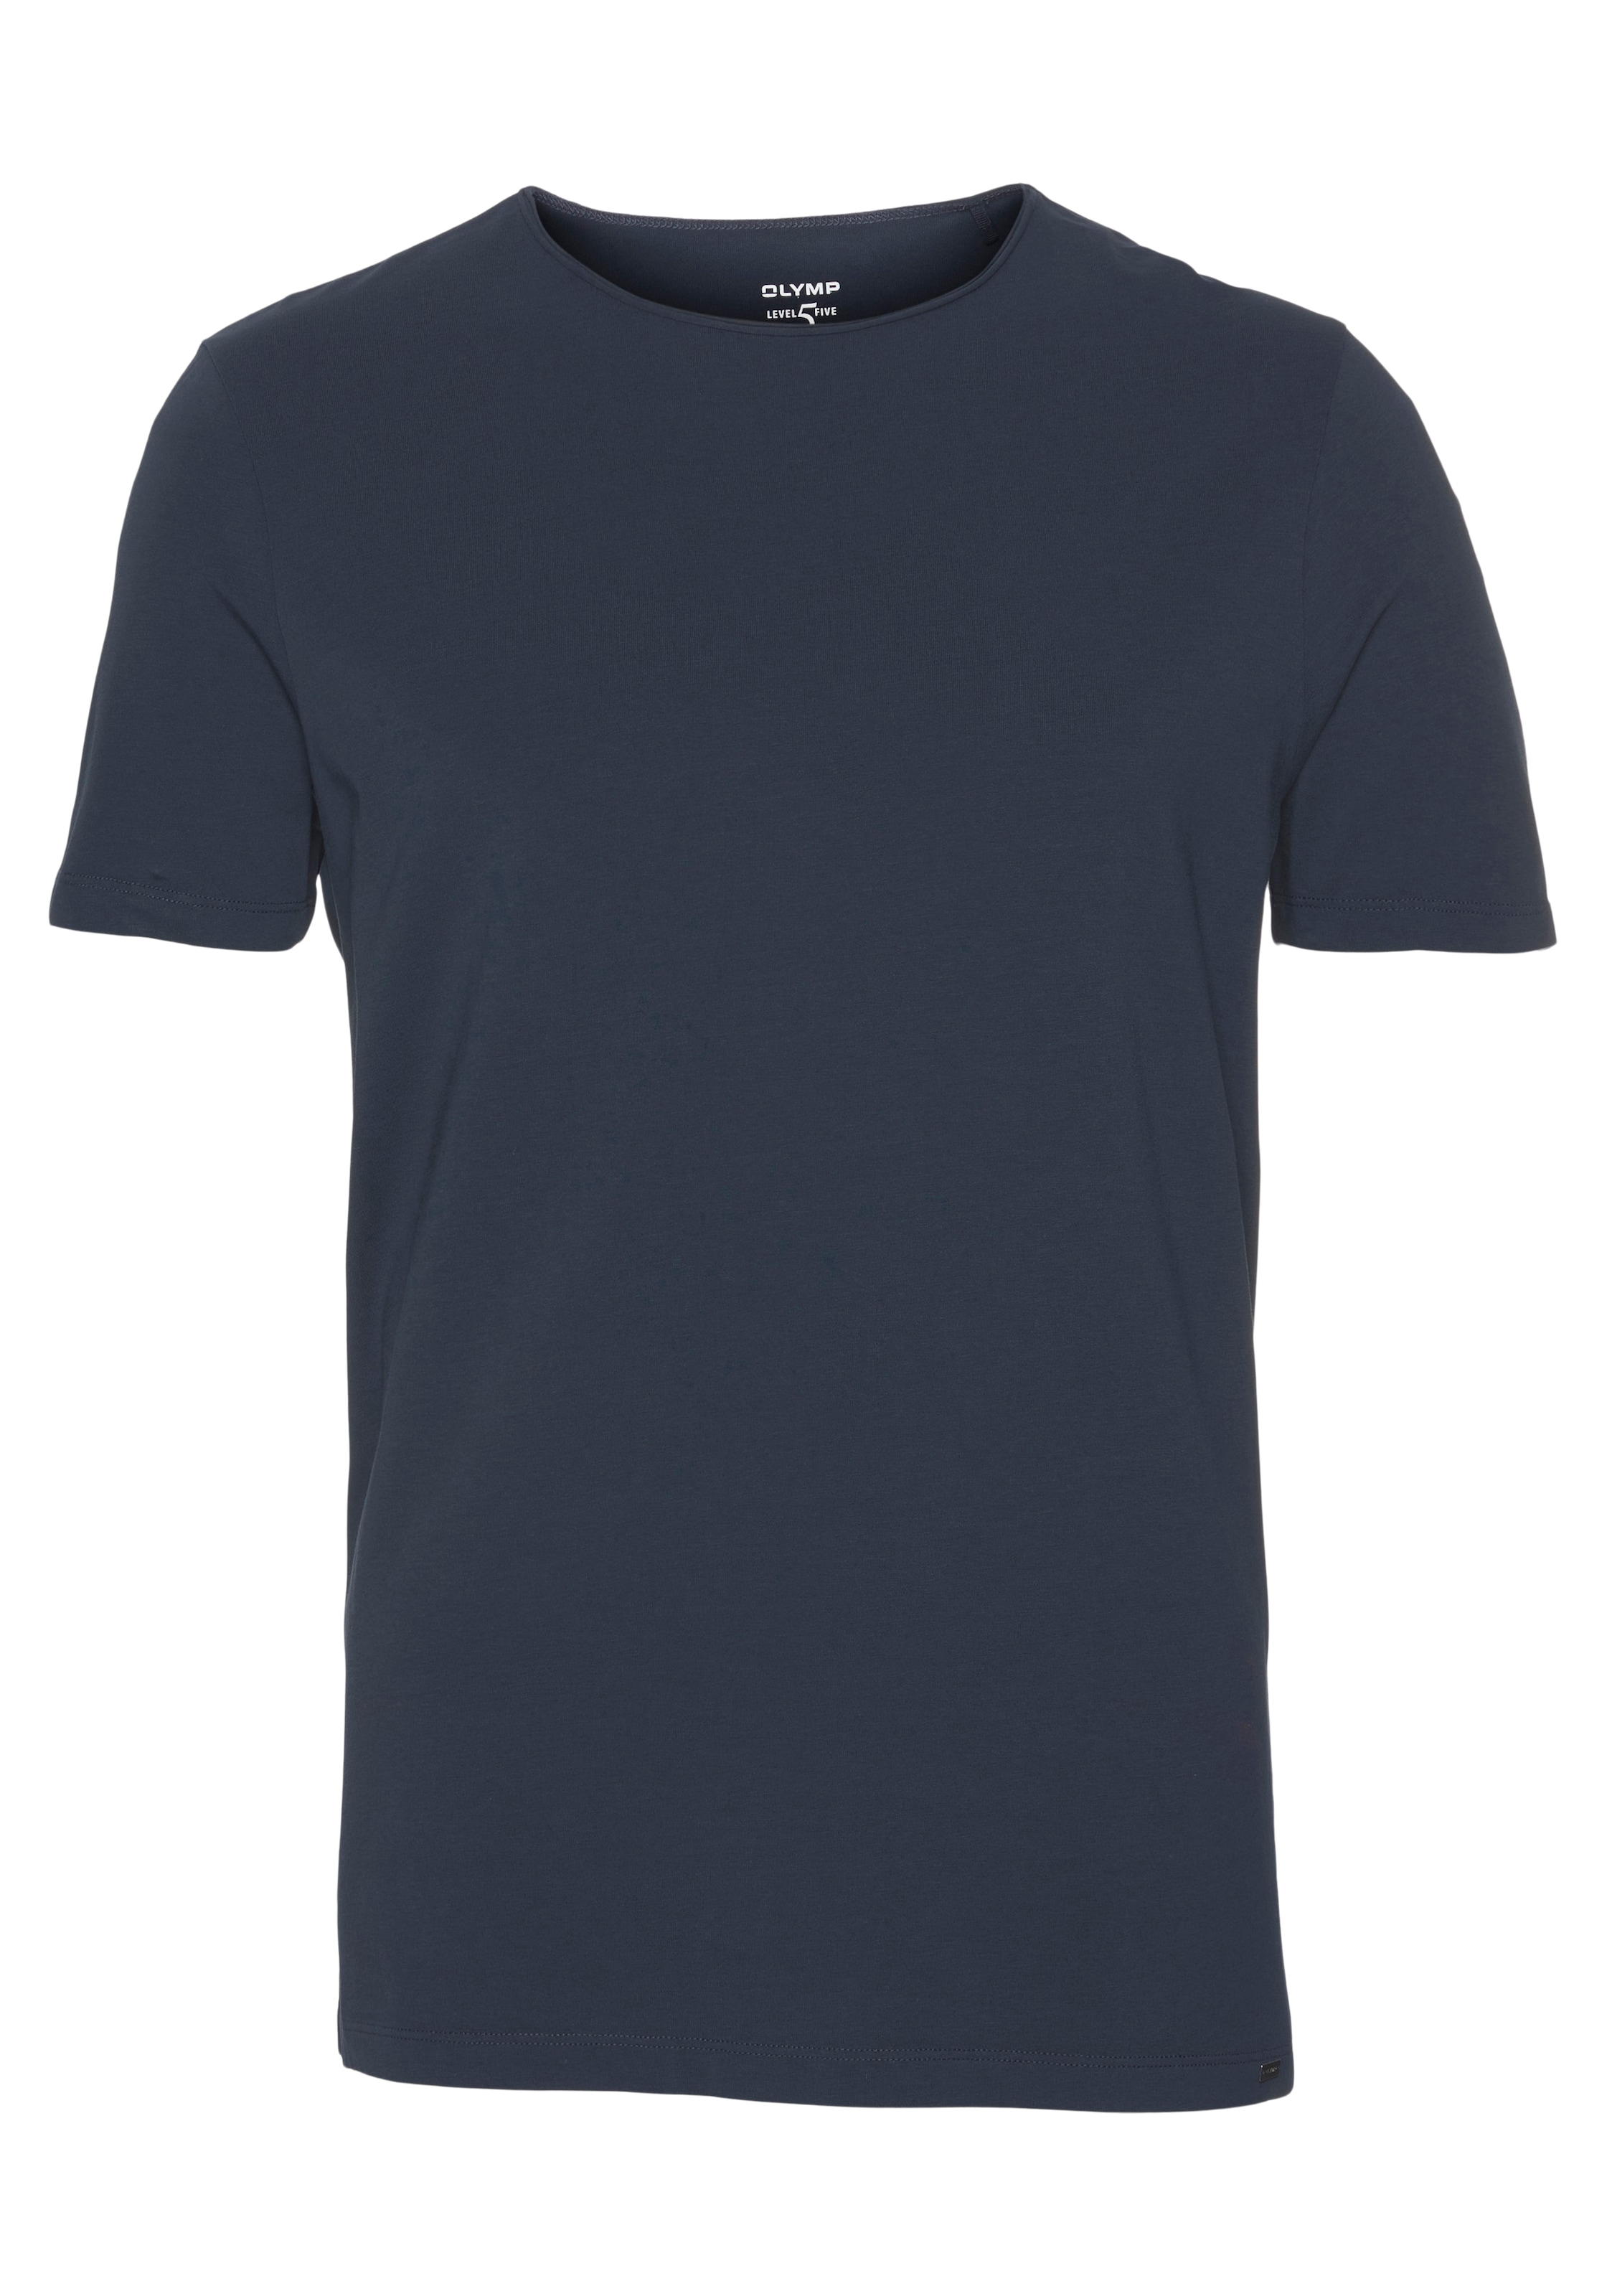 feinem Five fit«, aus body OTTO bestellen T-Shirt OLYMP bei online Jersey »Level